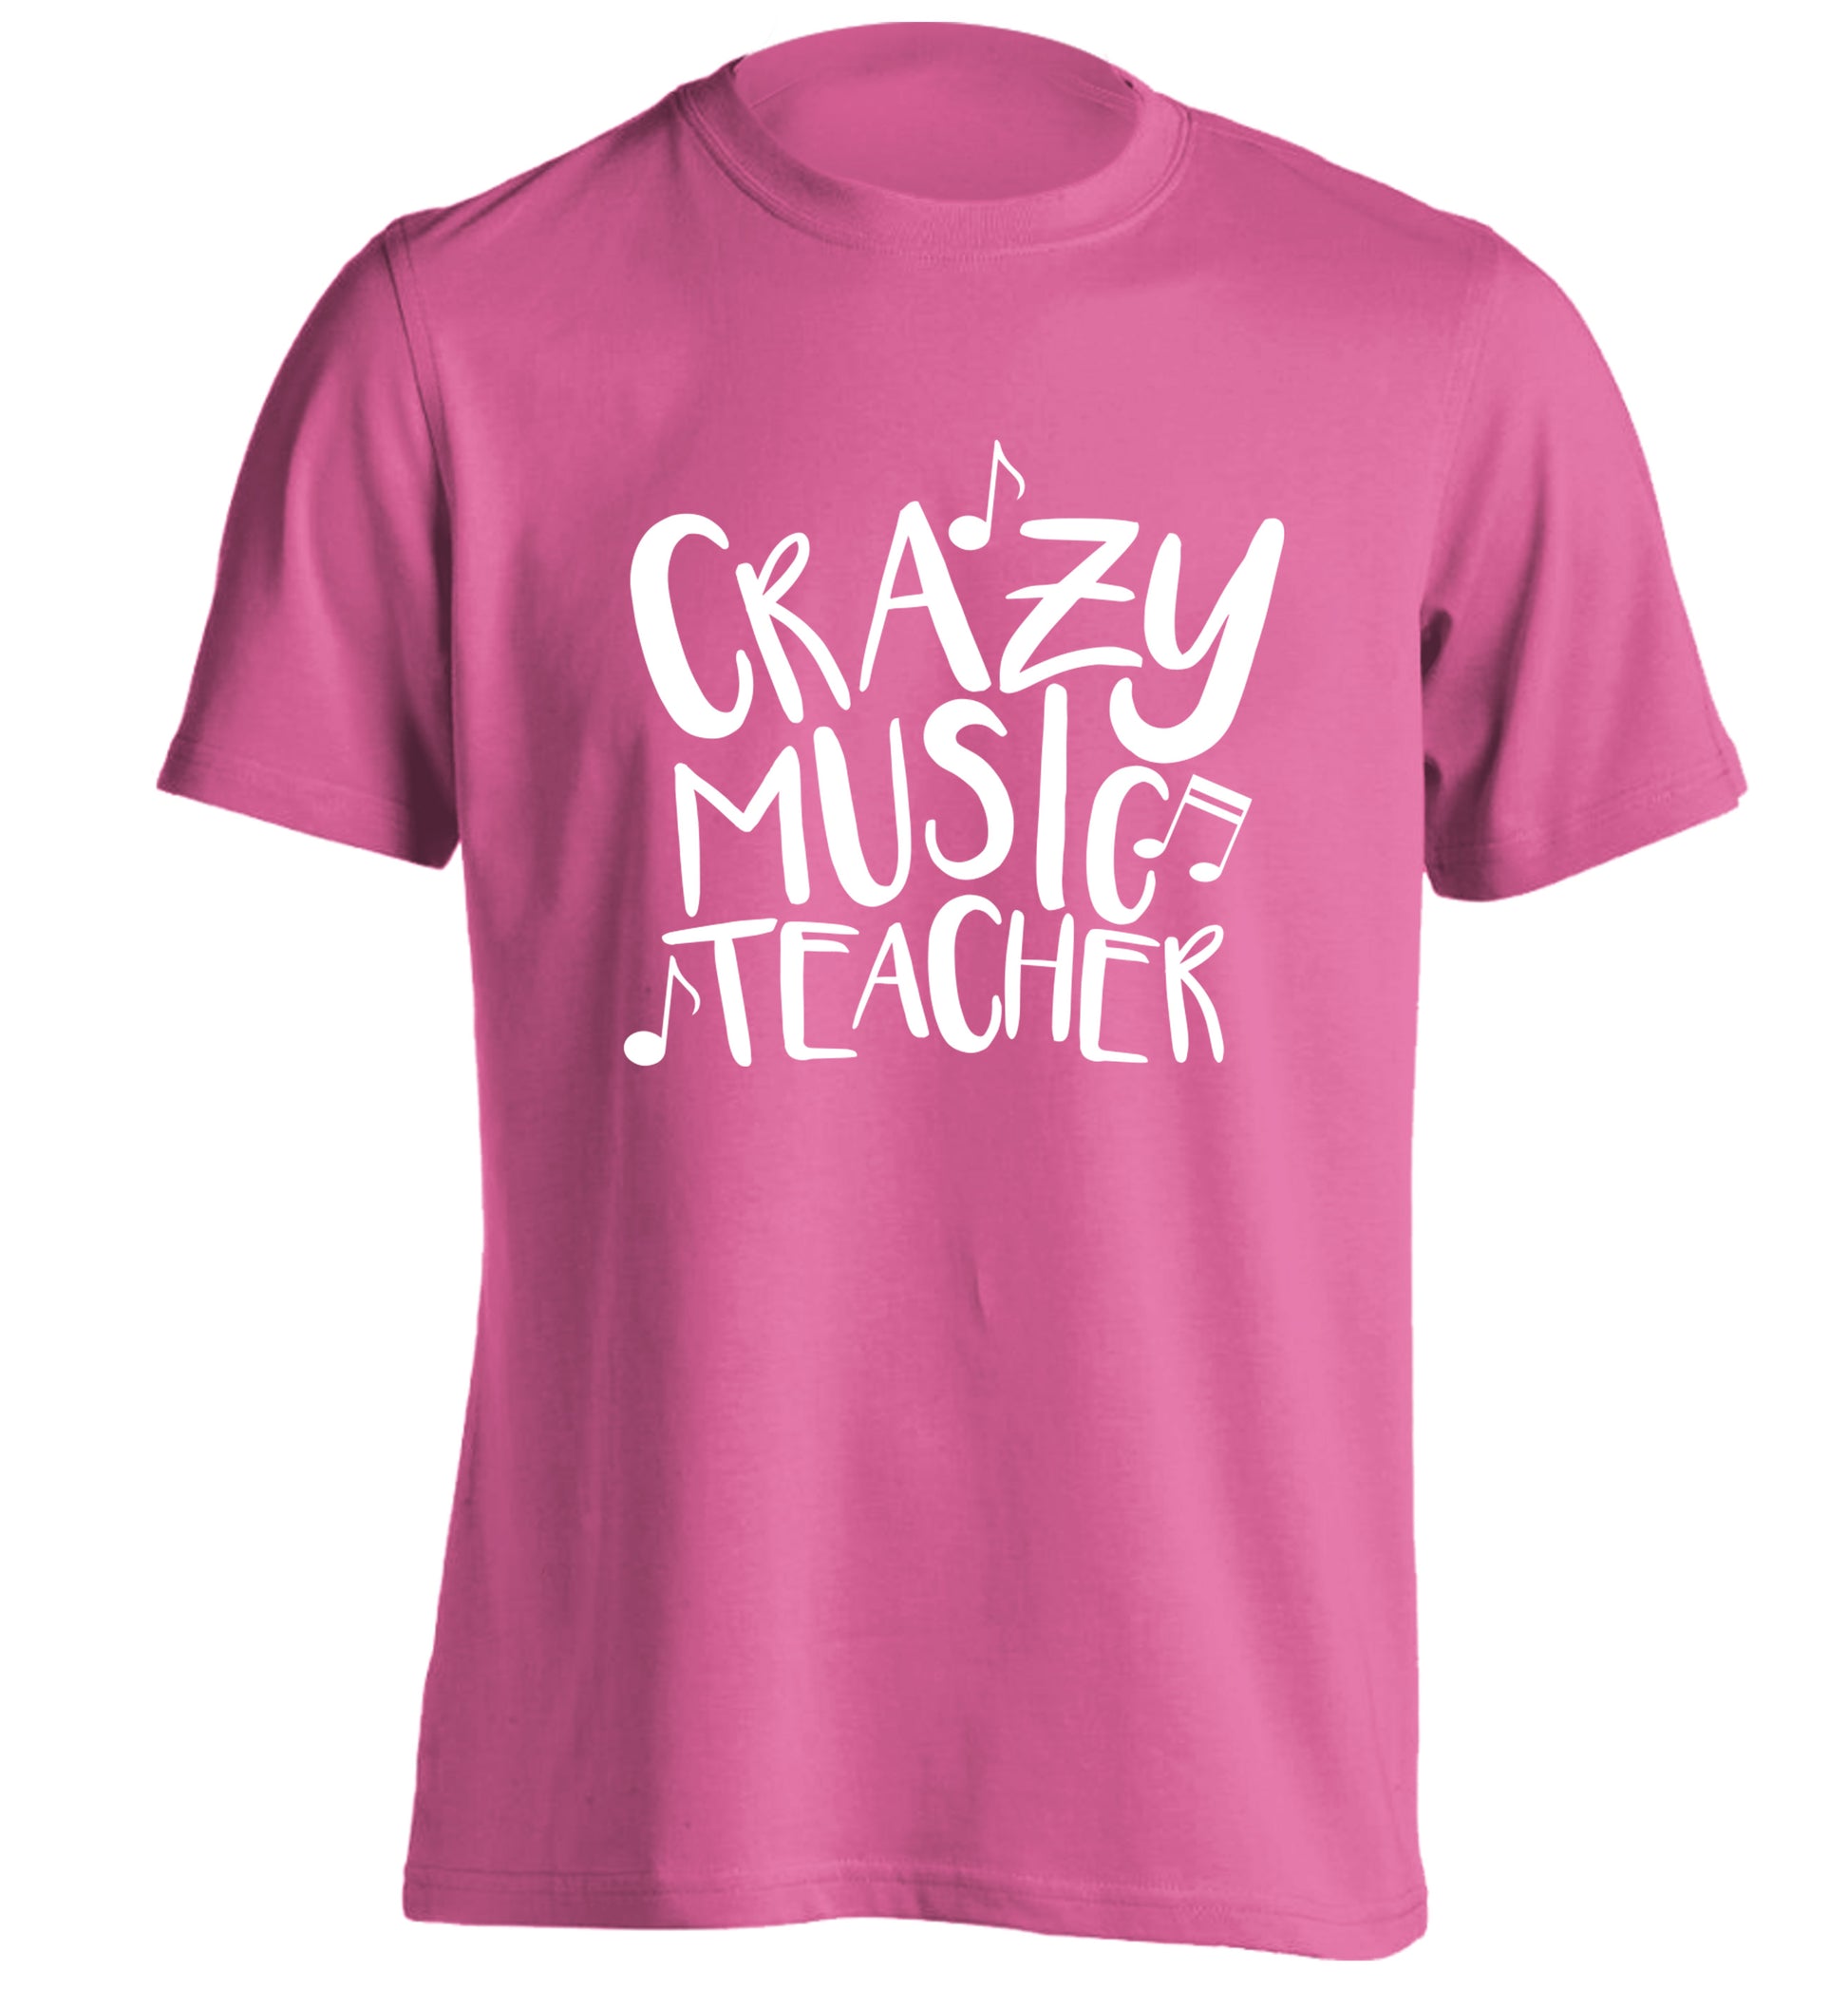 Crazy music teacher adults unisex pink Tshirt 2XL